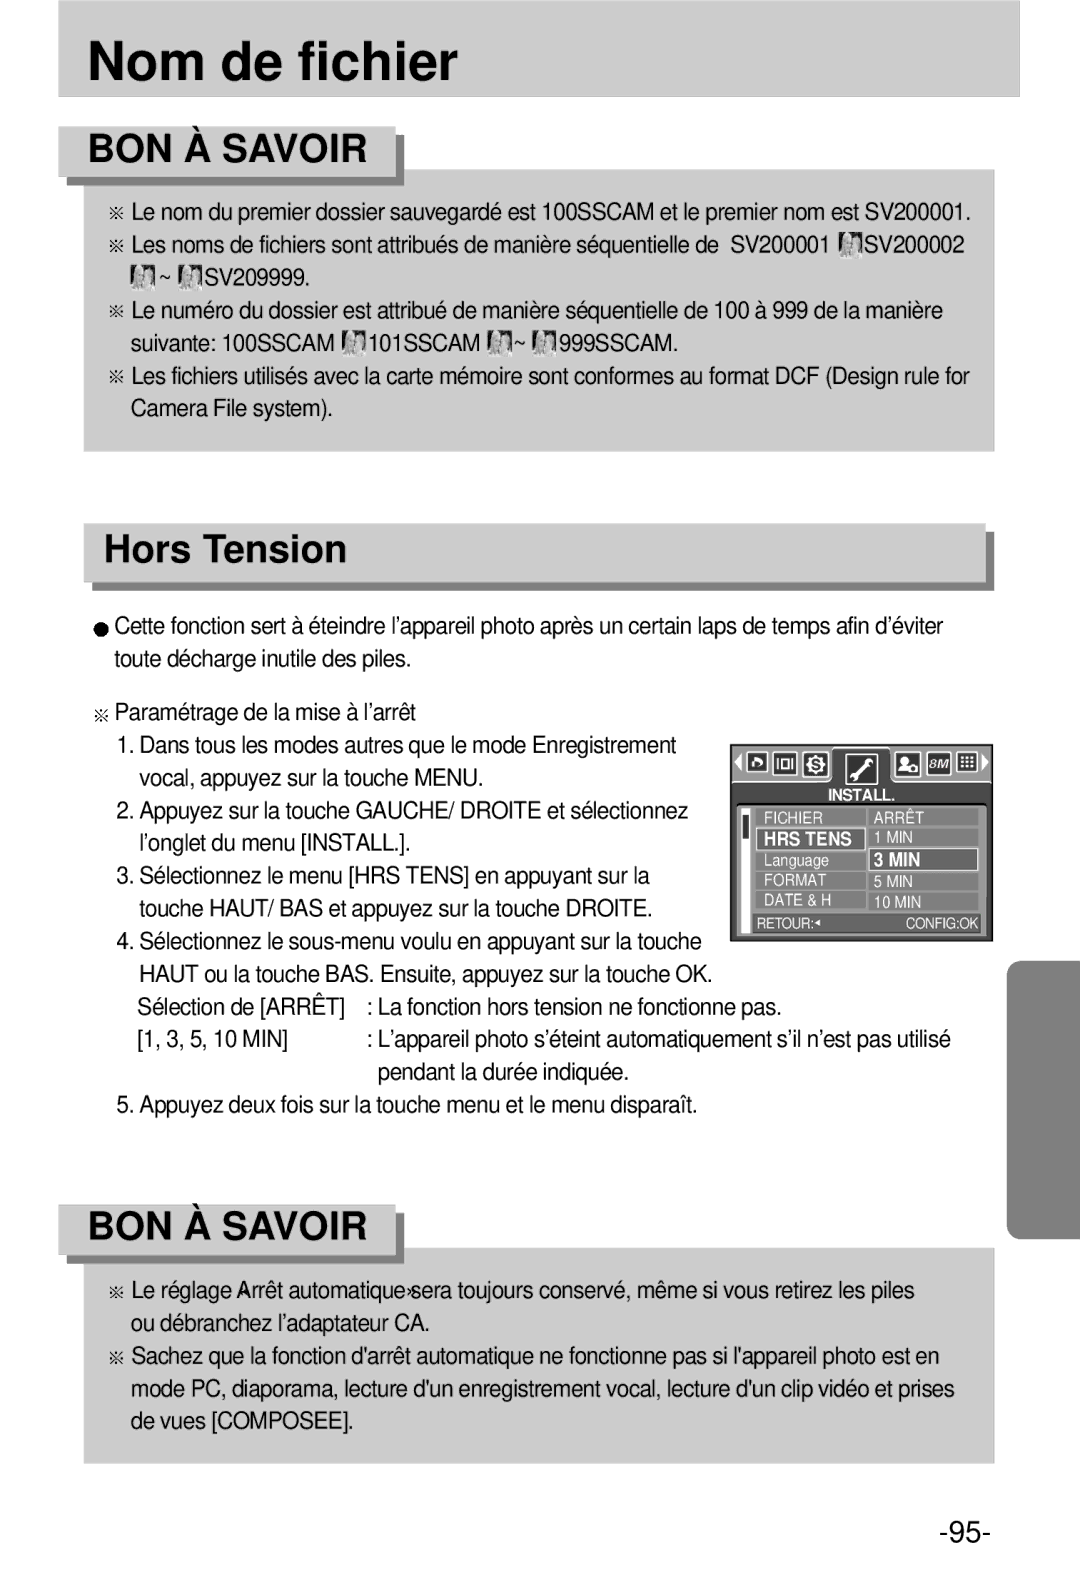 Samsung EC-V800ZSBA/FR manual Nom de fichier, Hors Tension 